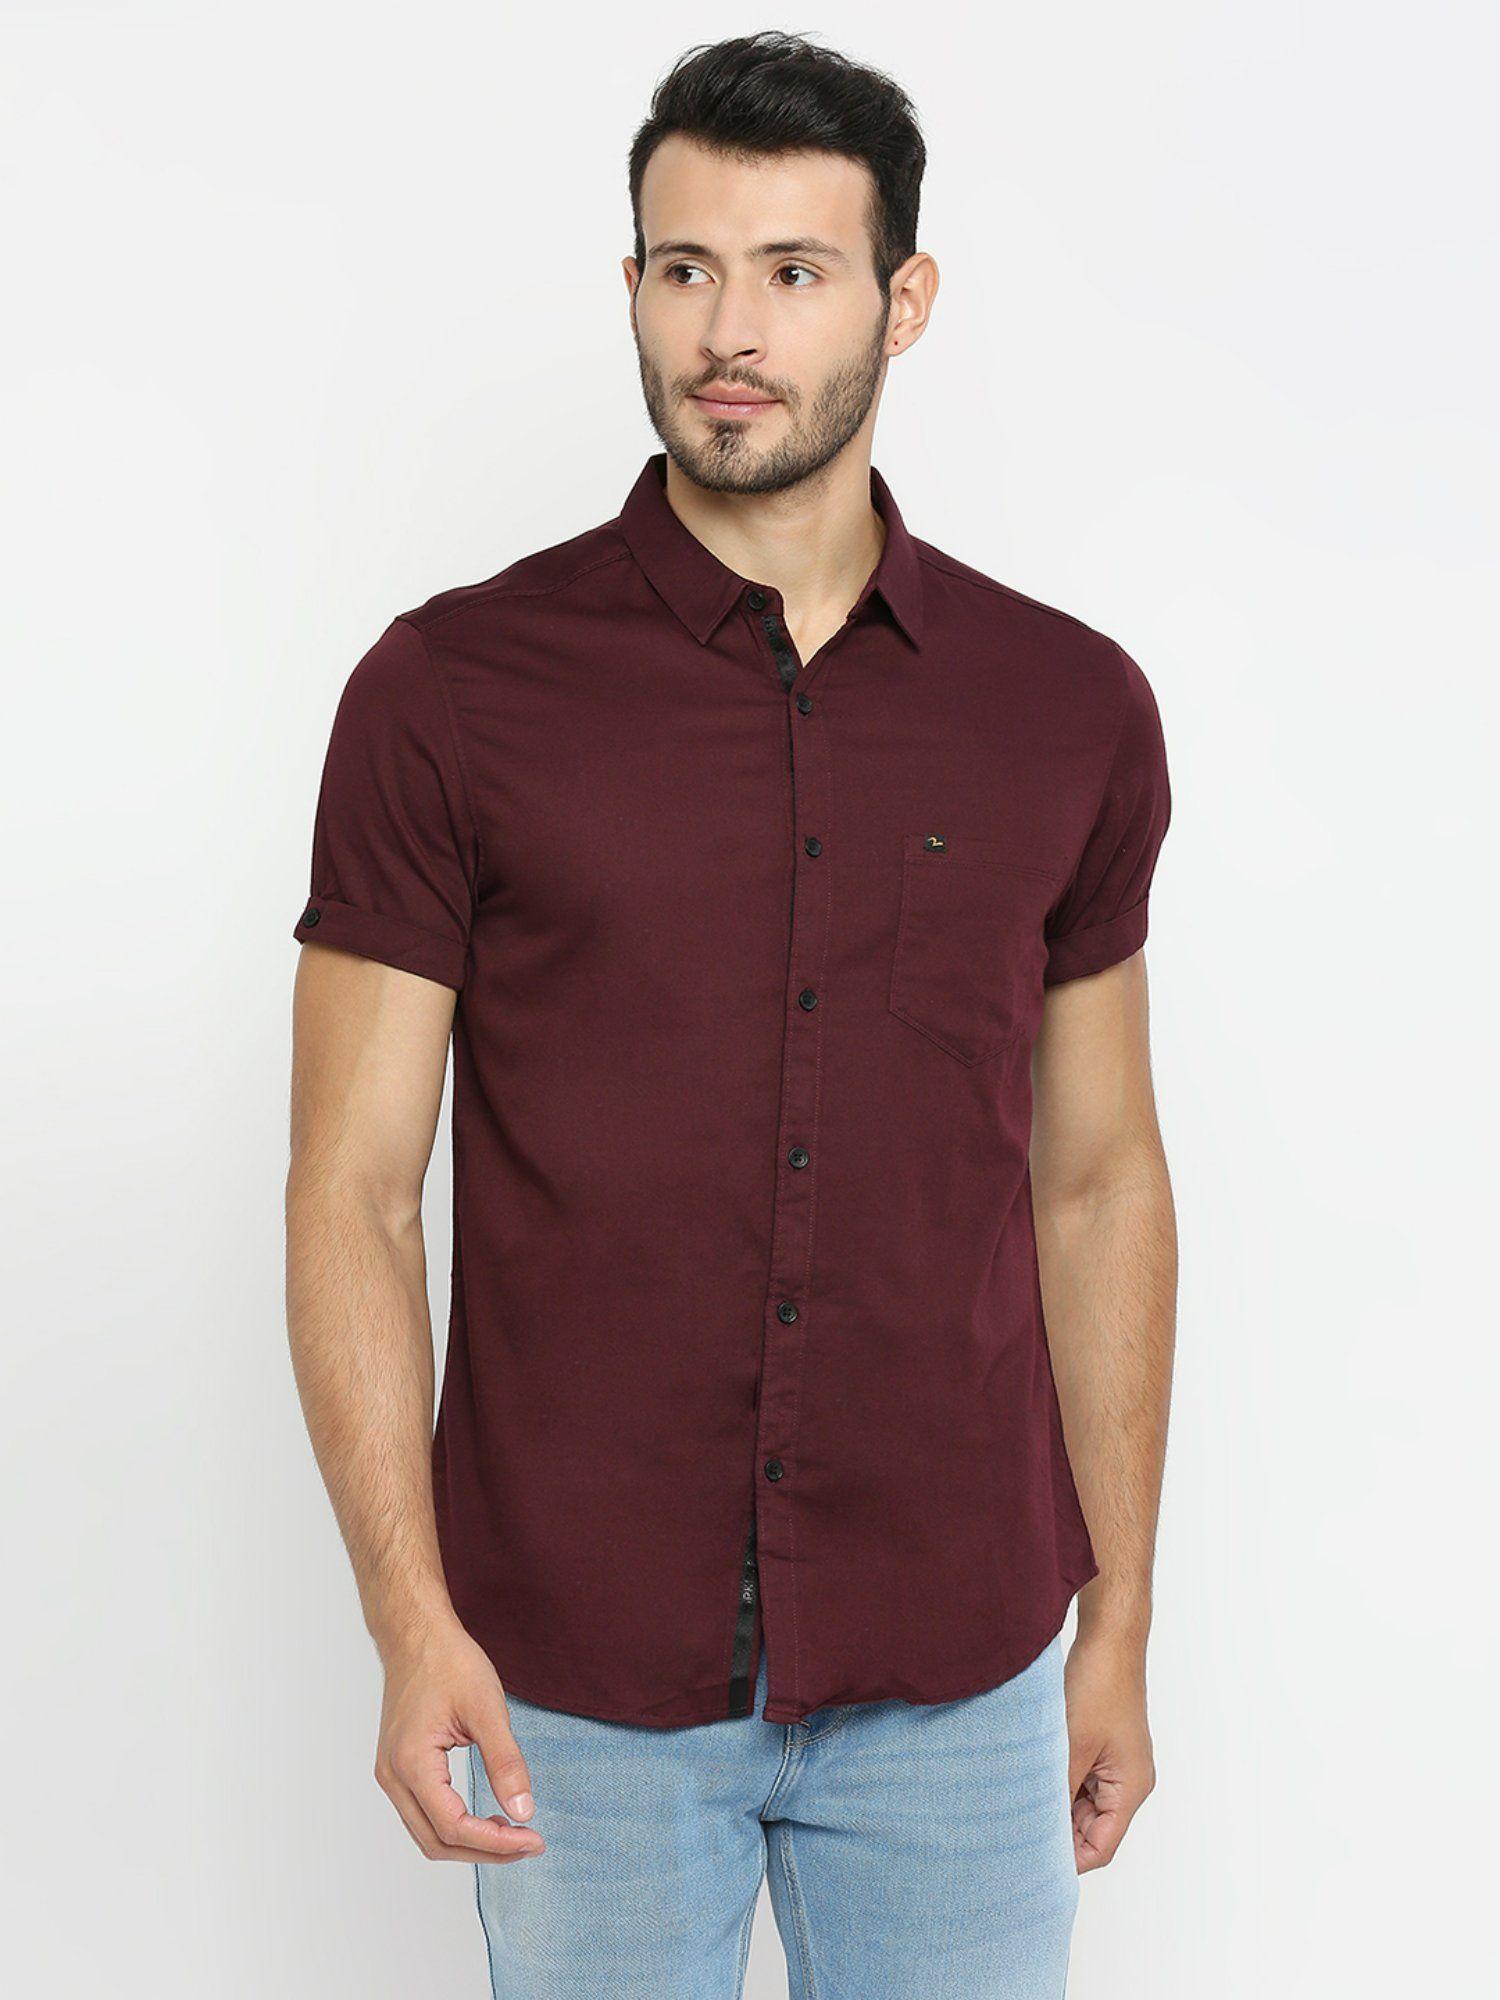 wine cotton half sleeve plain shirt for men